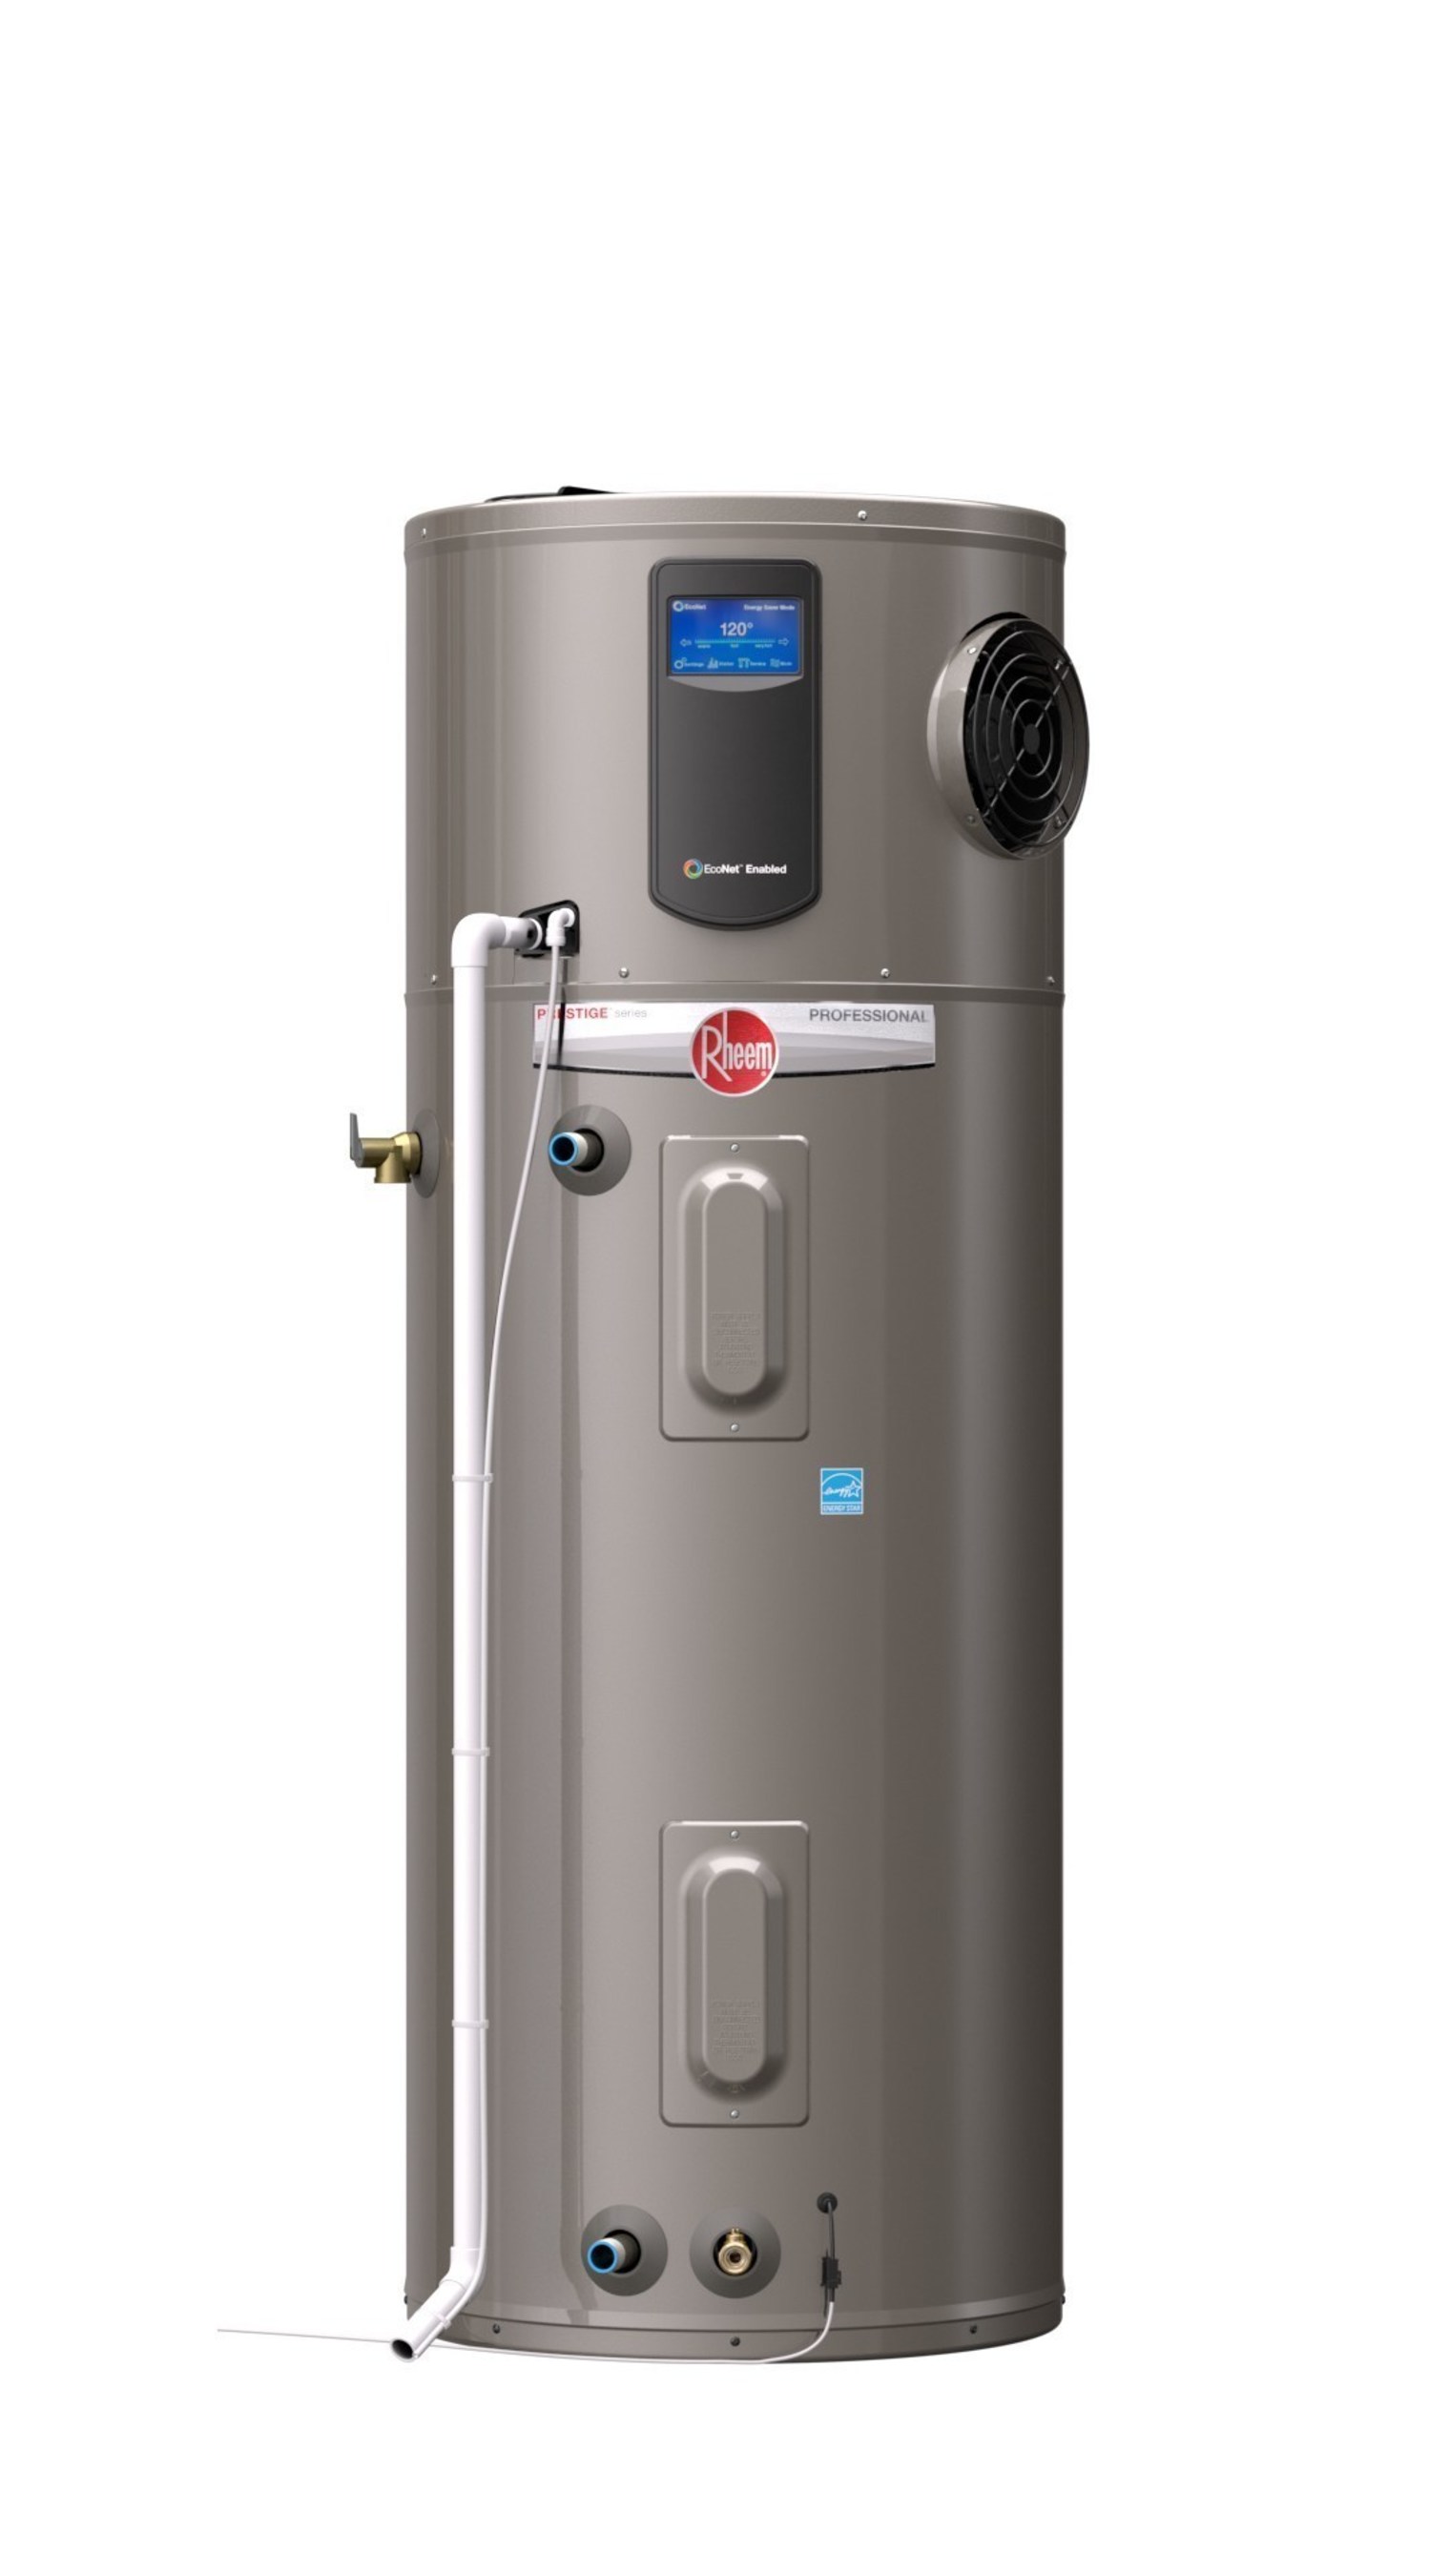 The New Rheem Prestige Series Hybrid Electric Water Heater Saving 